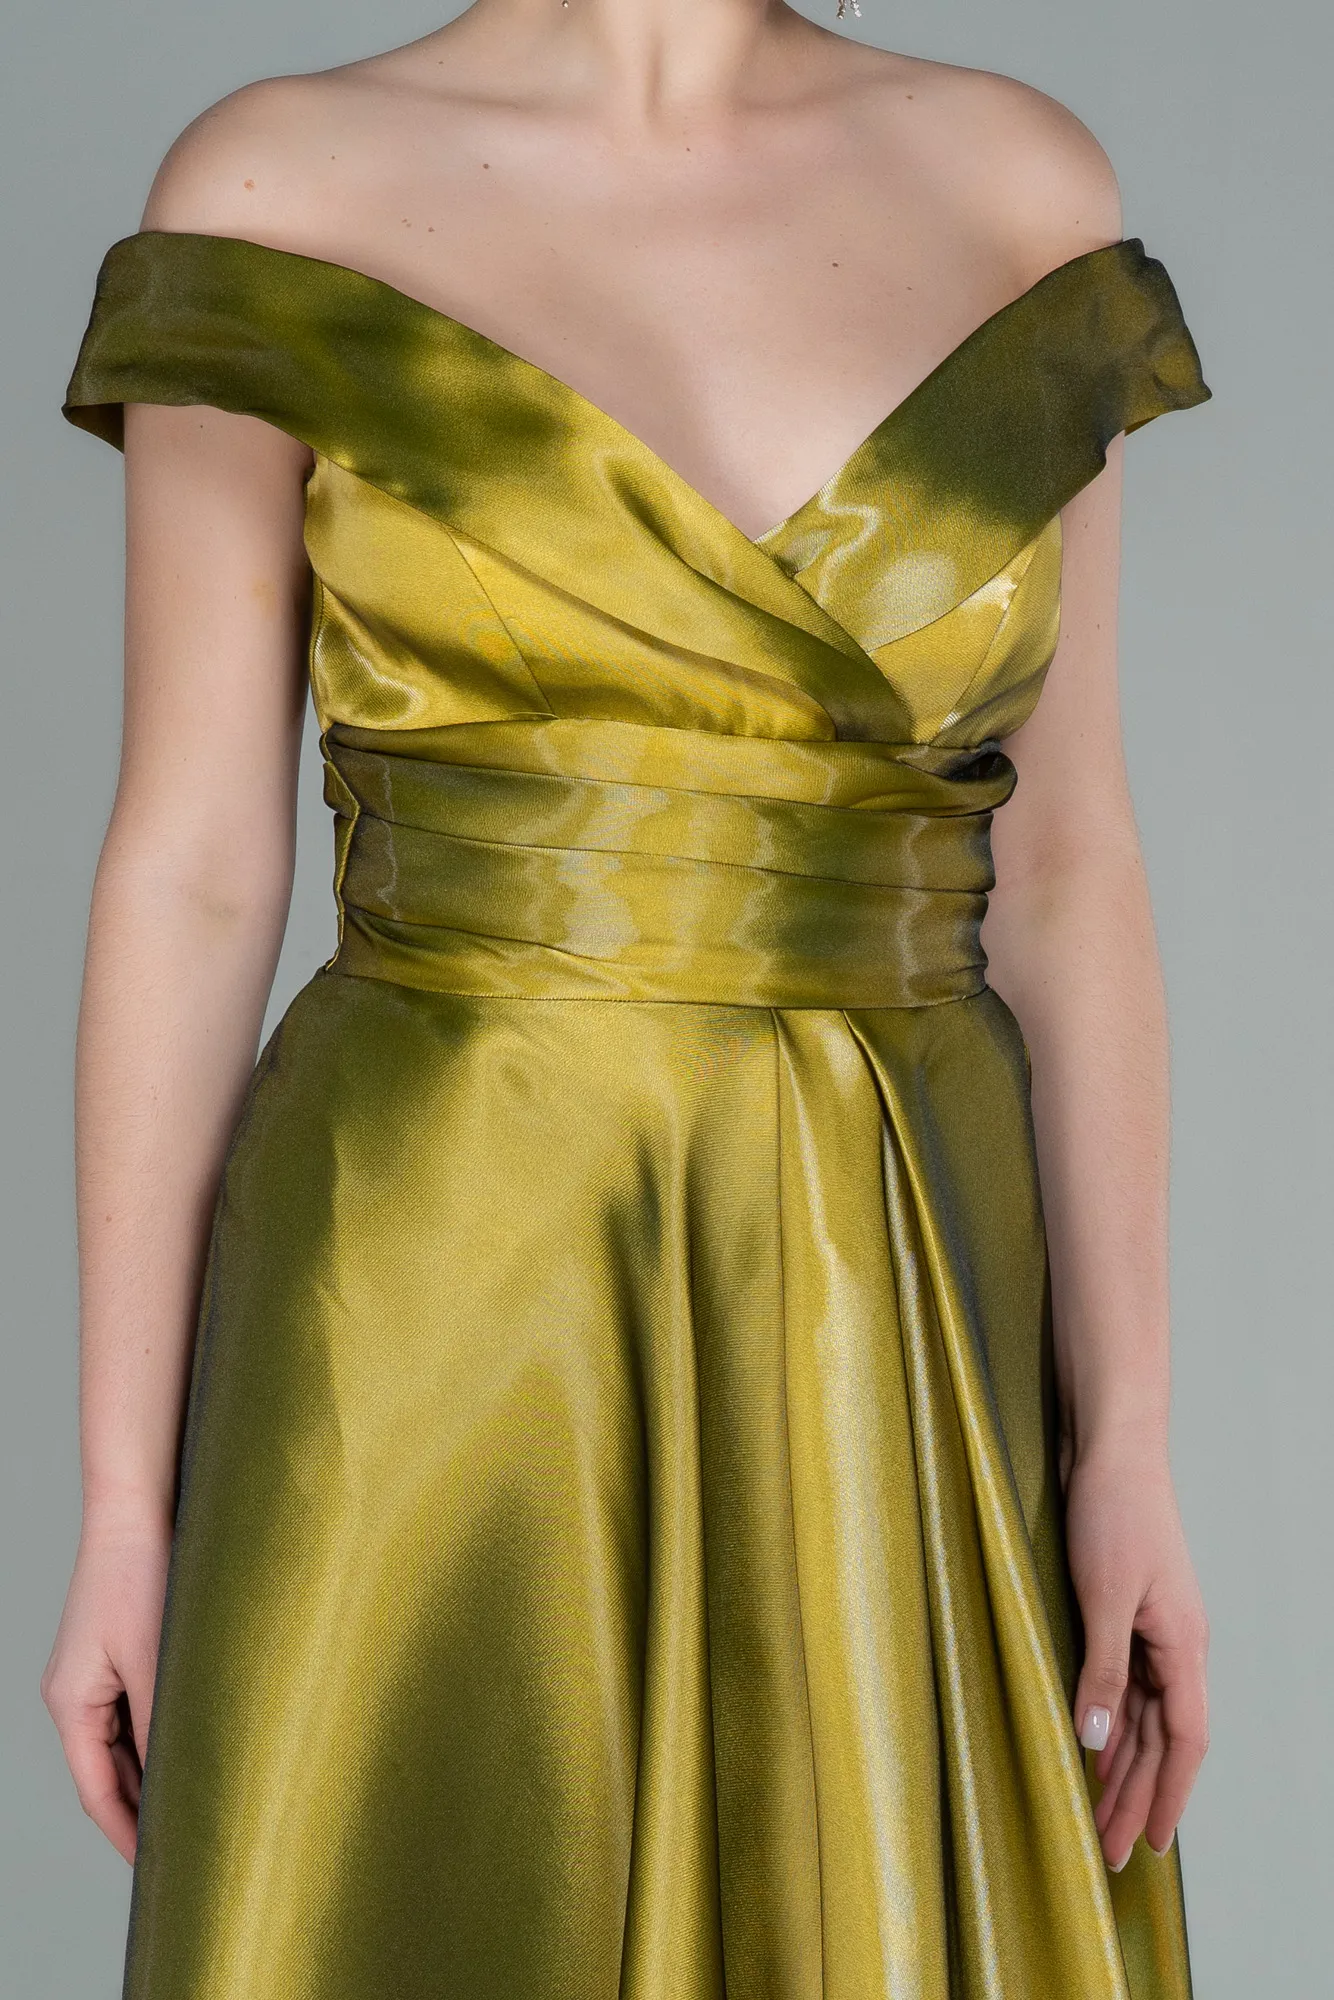 Pistachio Green-Long Evening Dress ABU2824